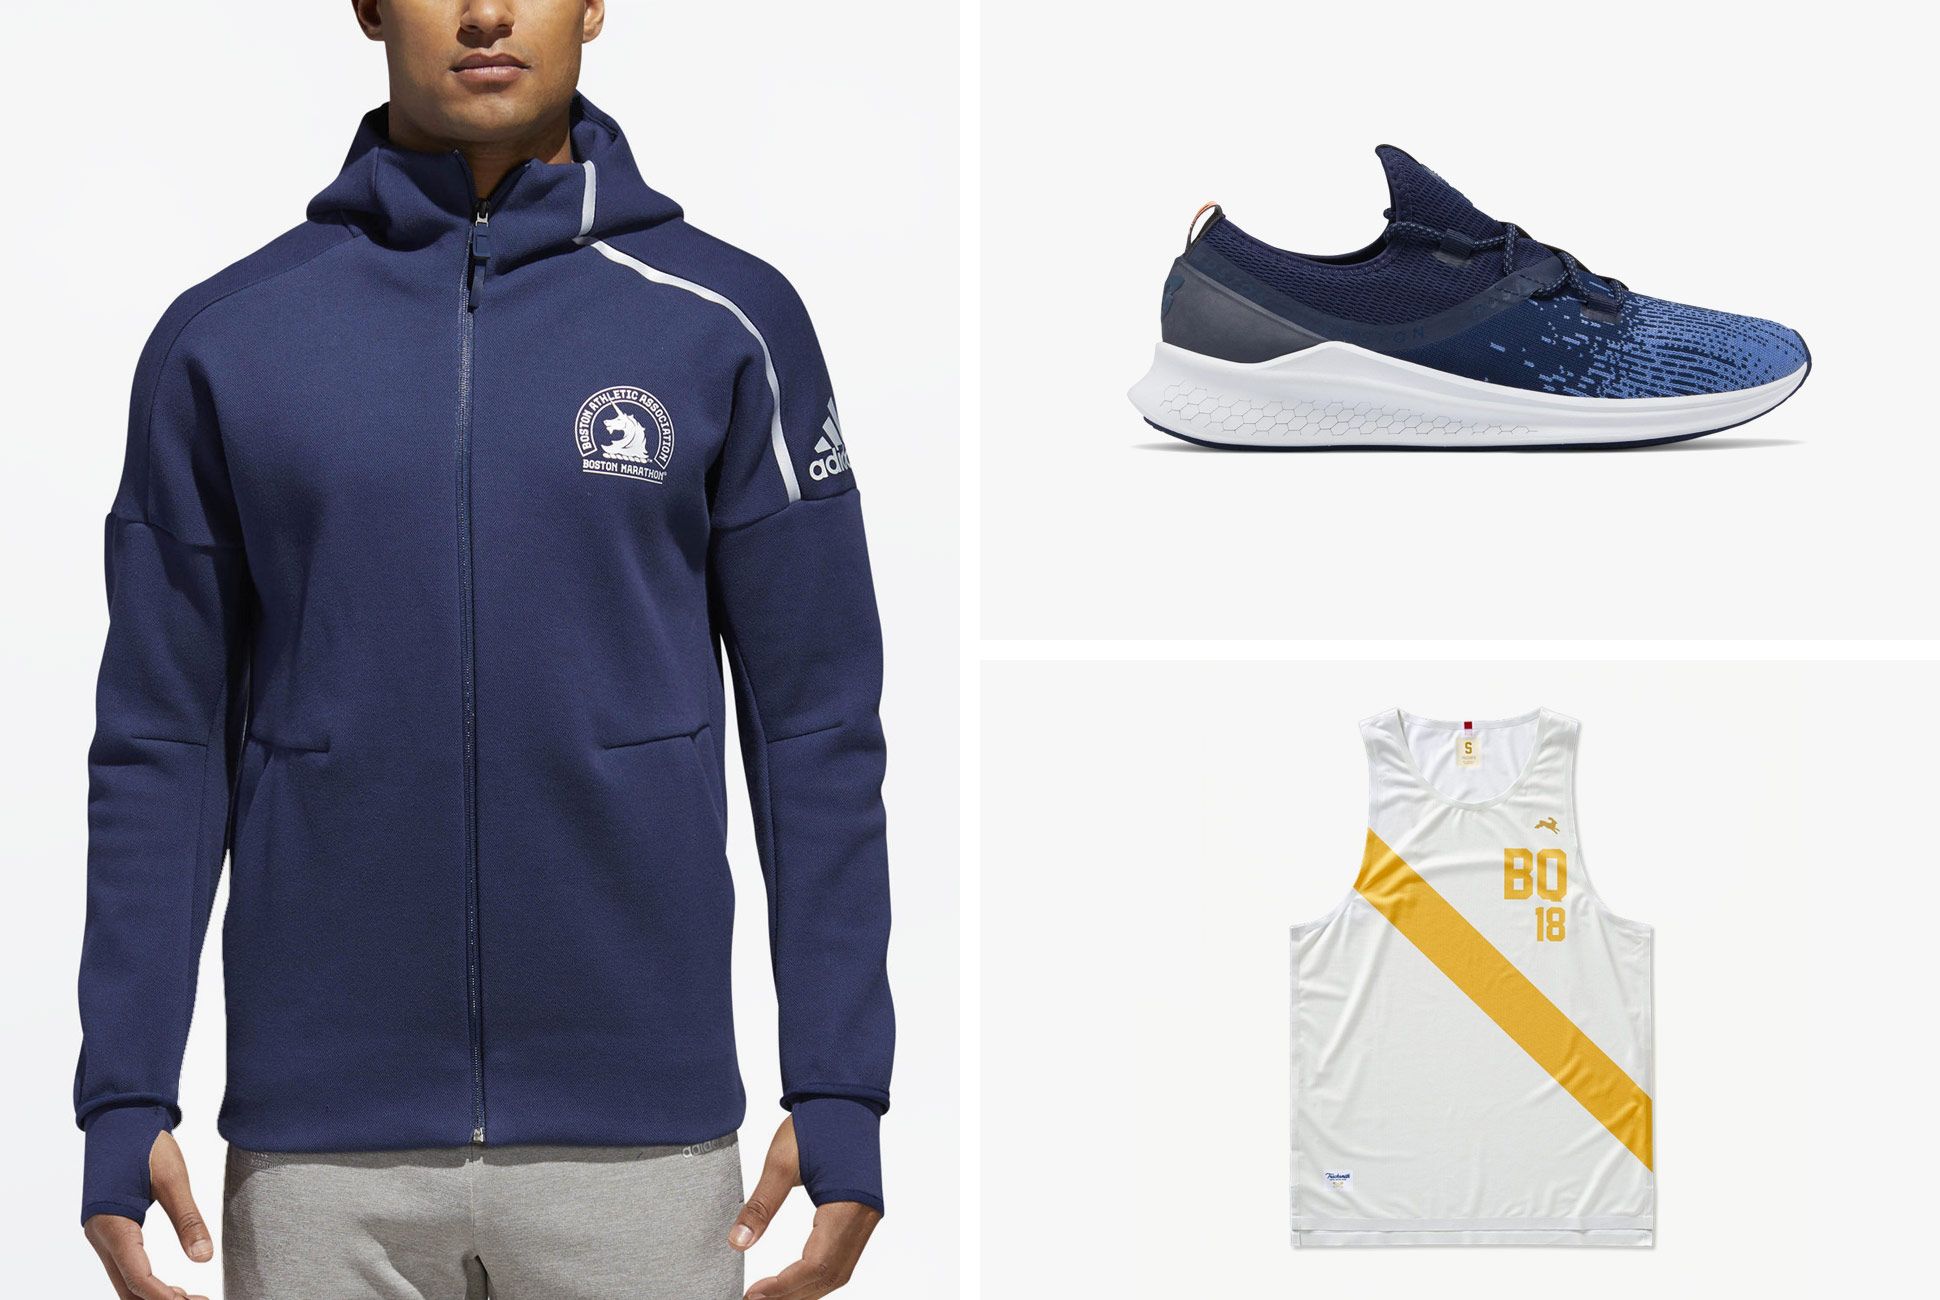 Adidas Boston Marathon 2013 Apparel – Quick & Precise Gear Reviews